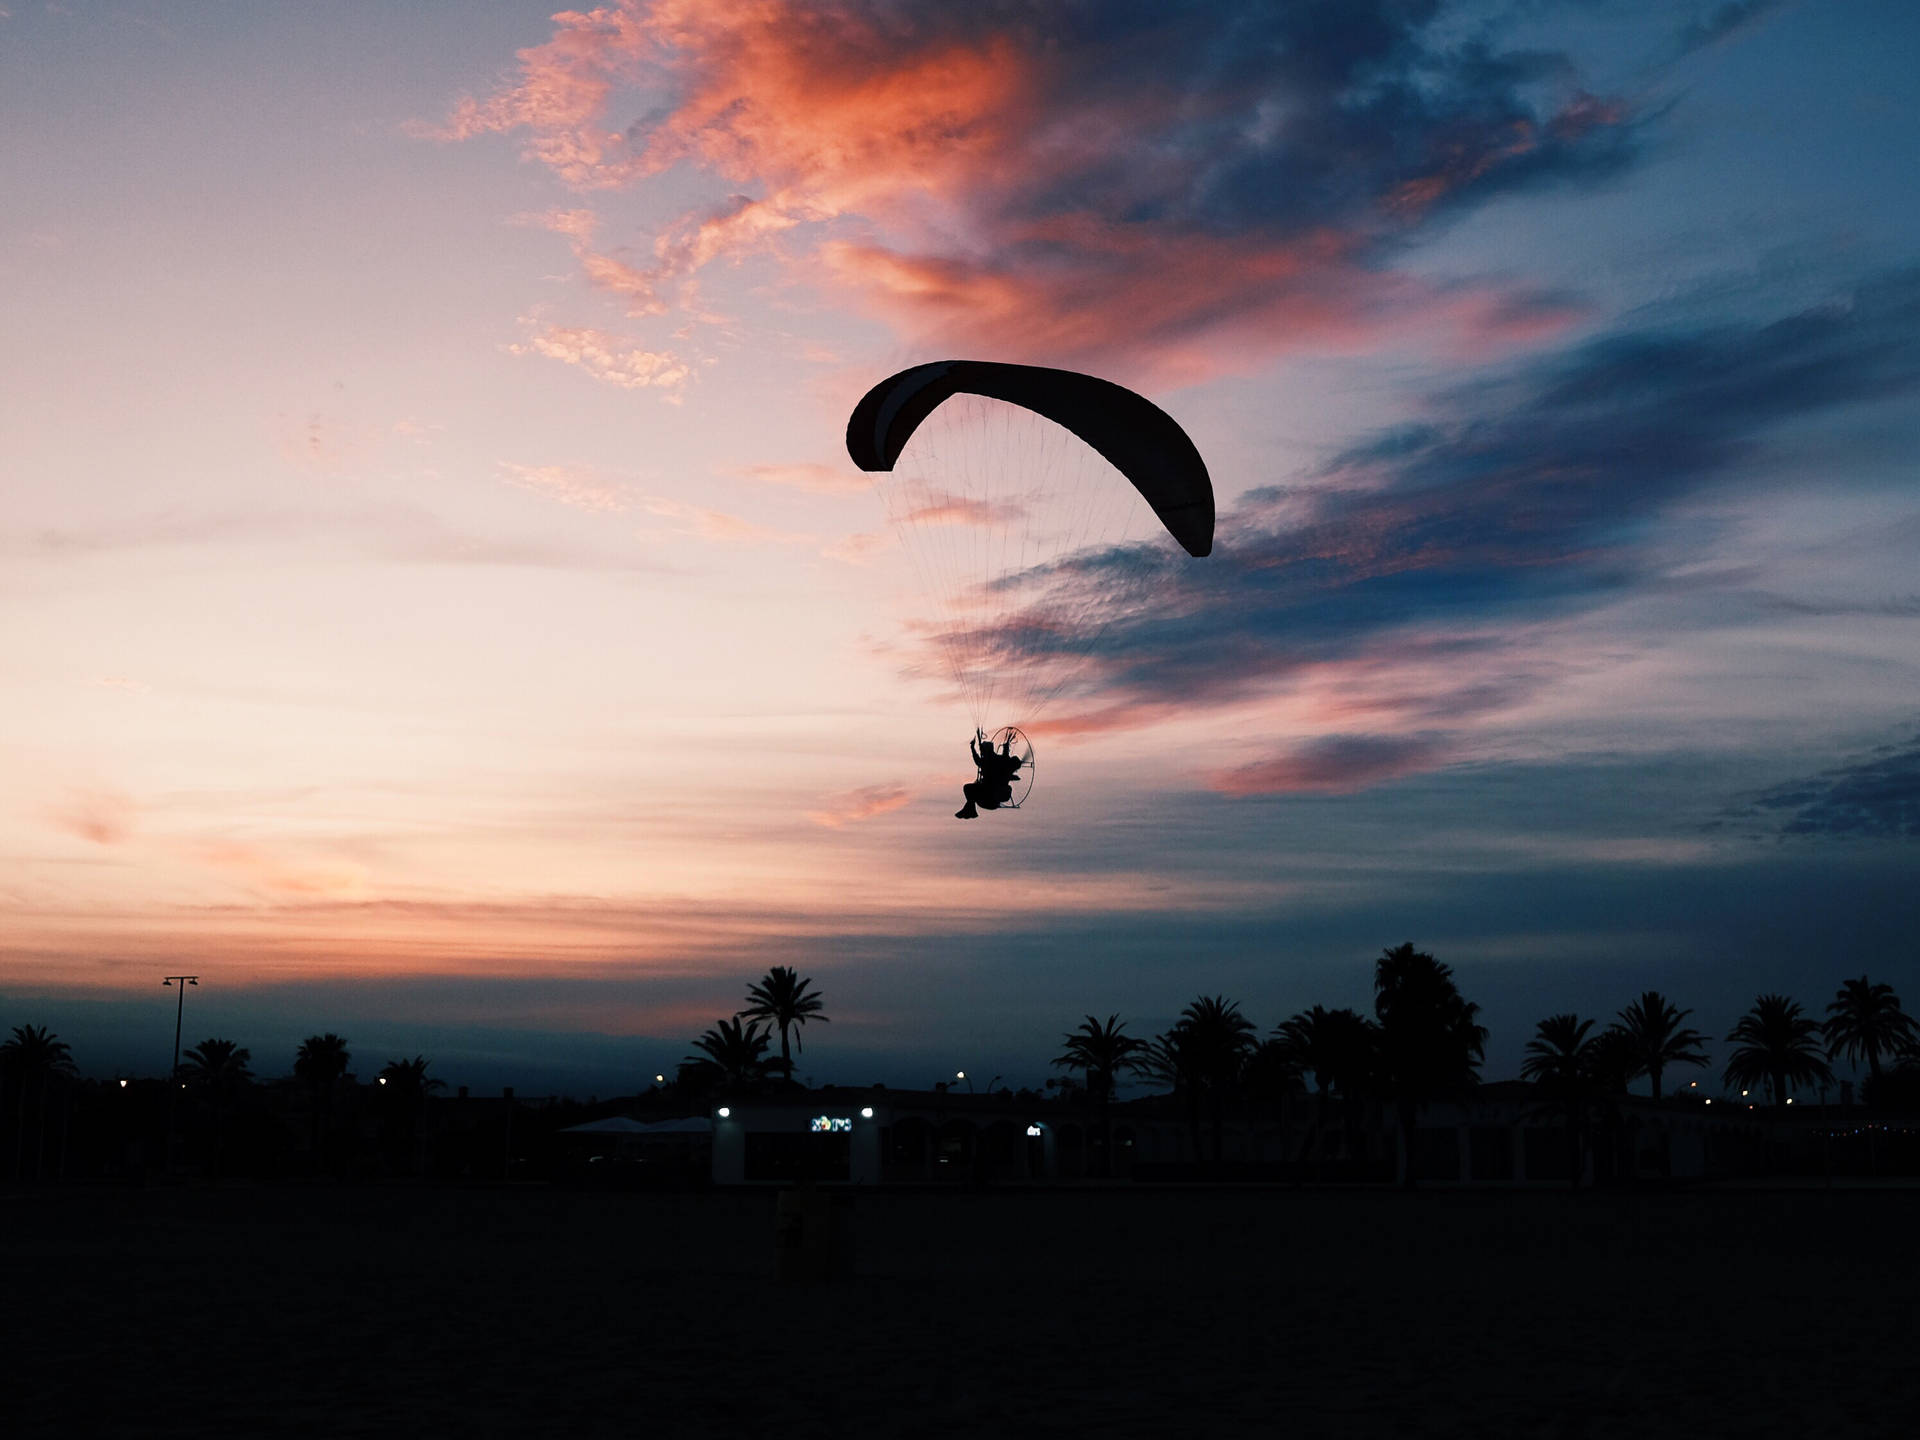 Paraglidingbei Der Landung Silhouette Wallpaper